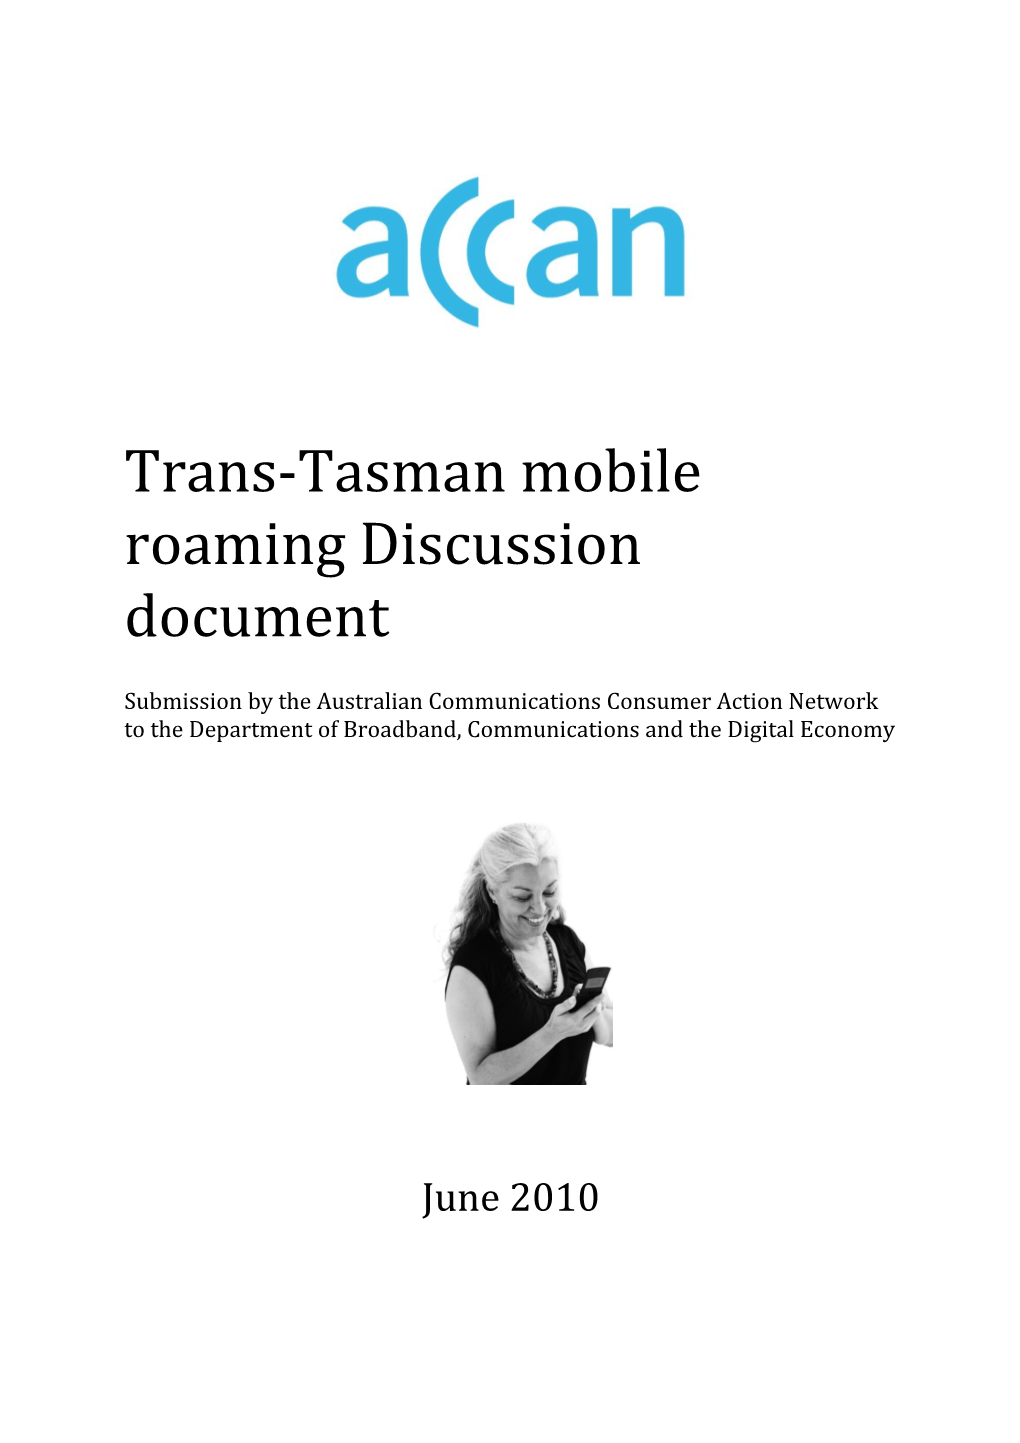 Trans-Tasman Mobile Roaming Discussion Document